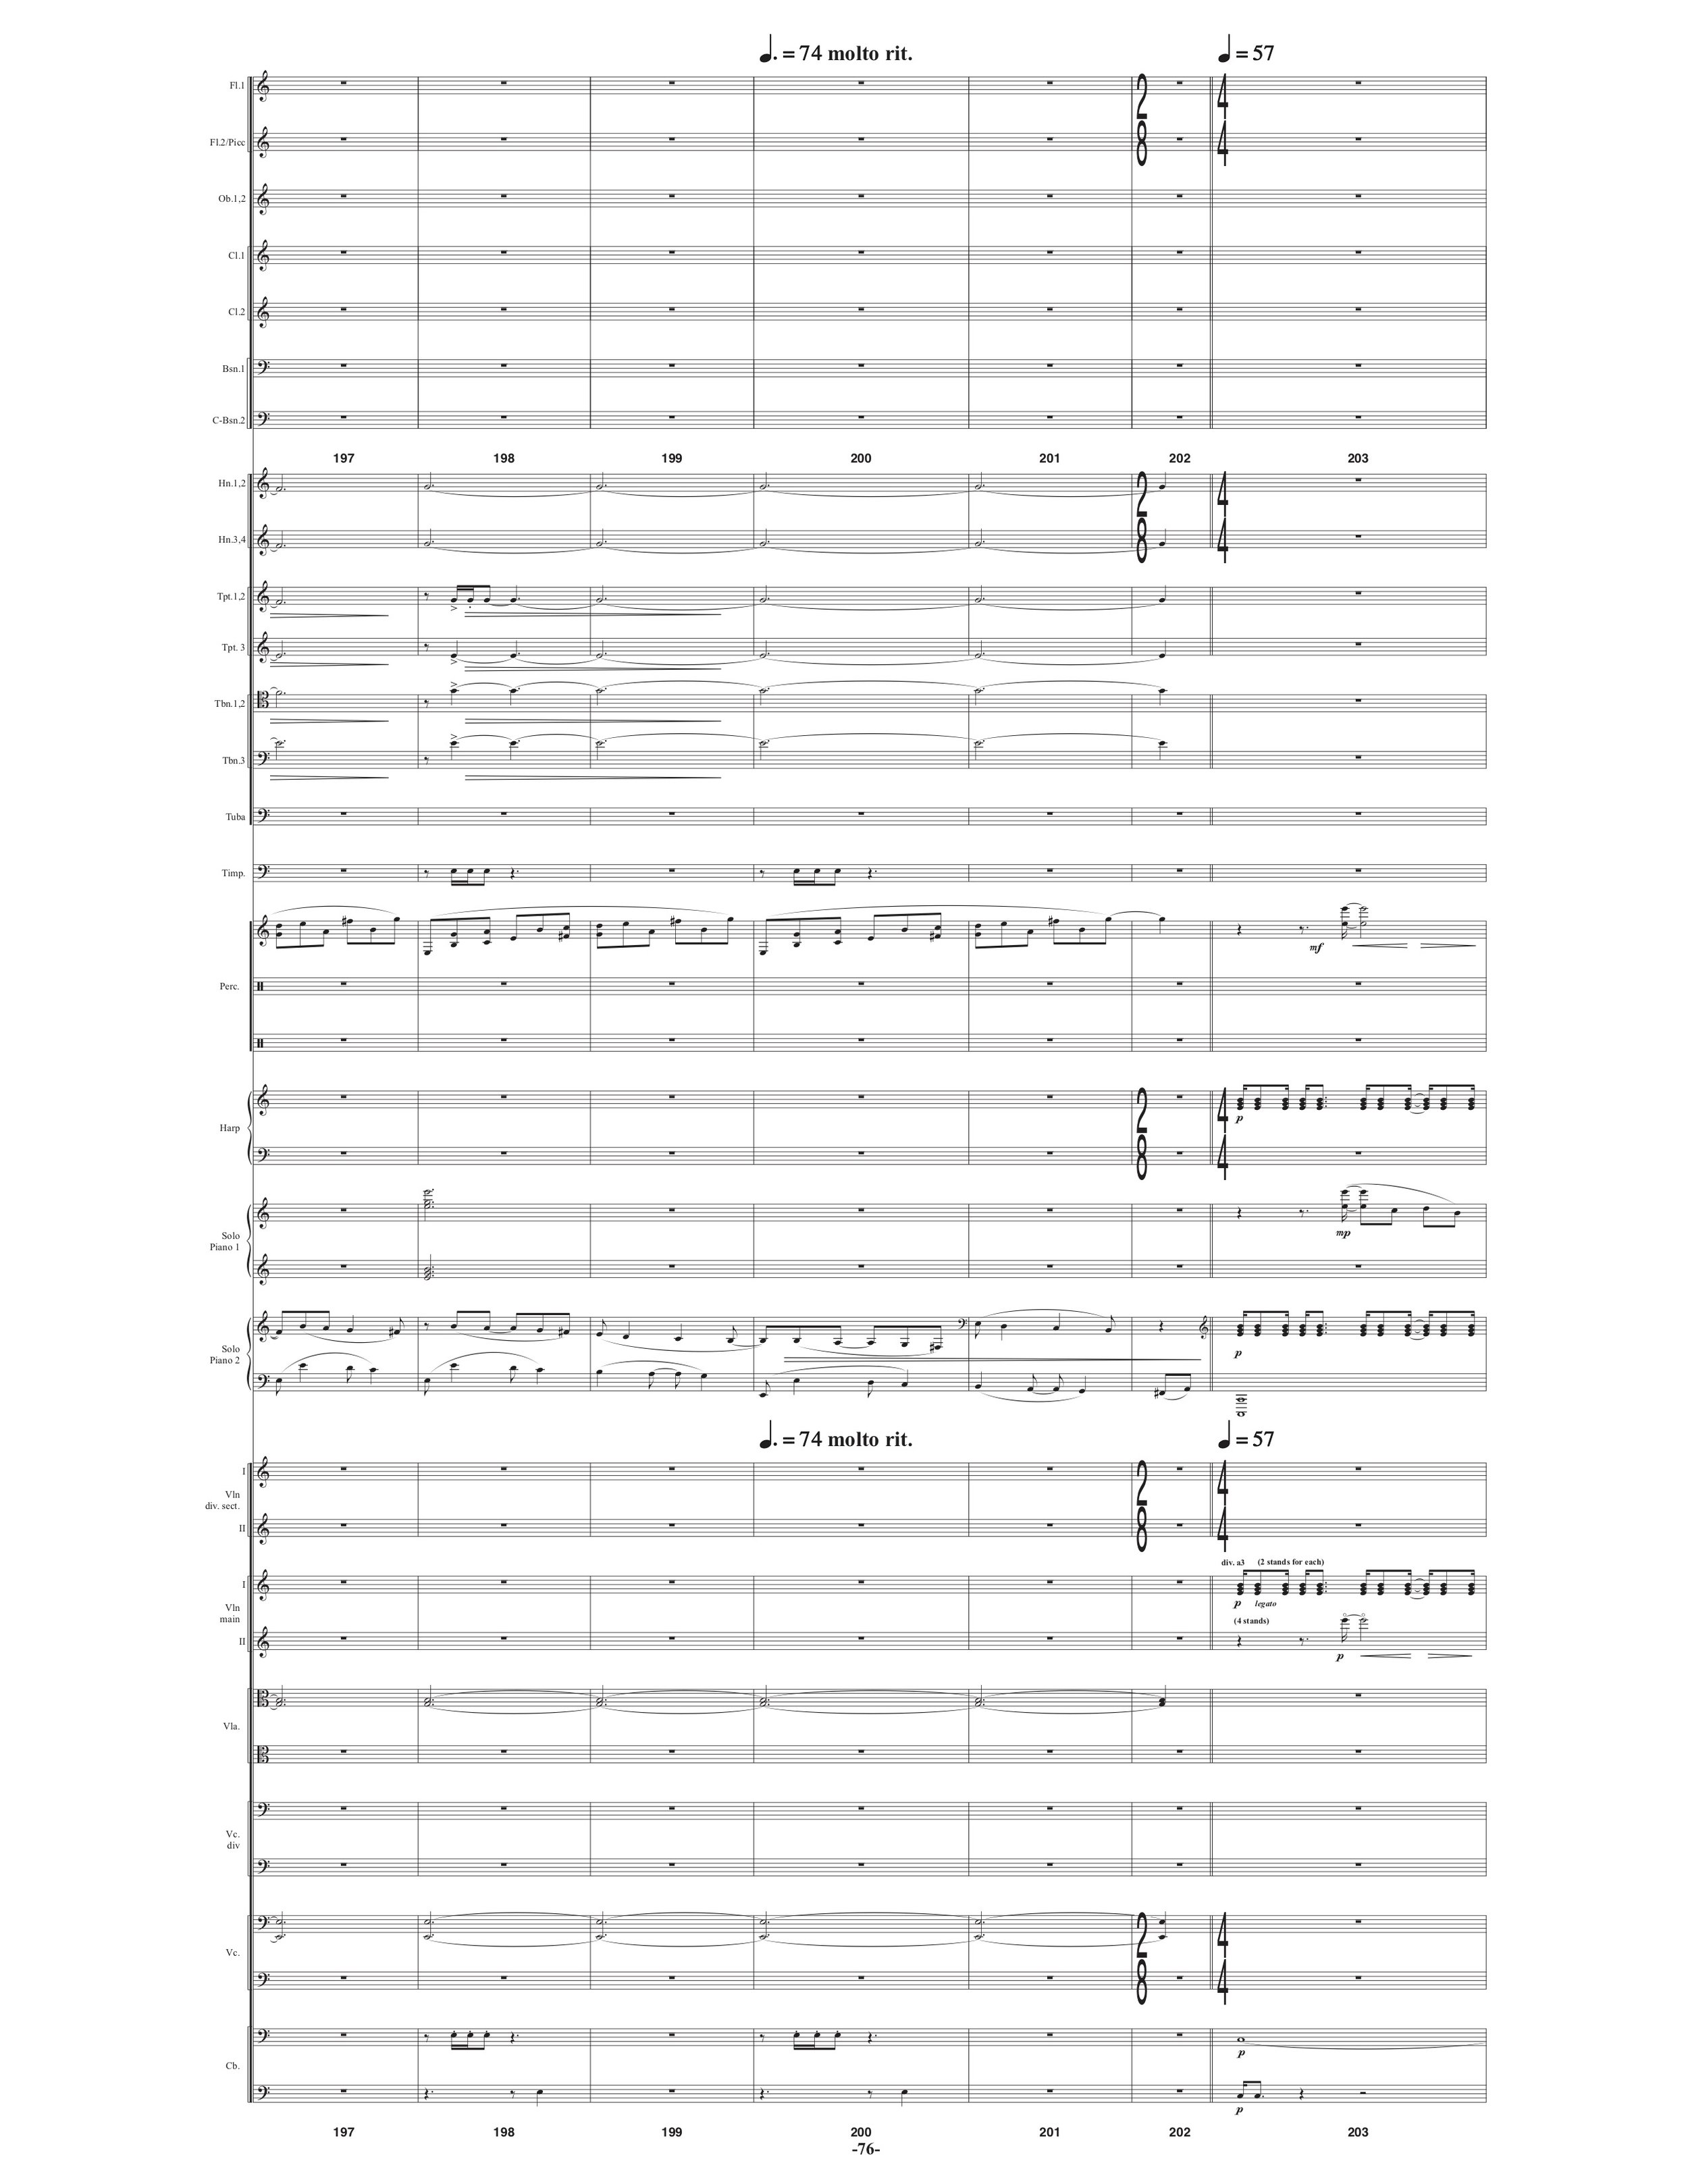 Symphony_Orch & 2 Pianos p81.jpg